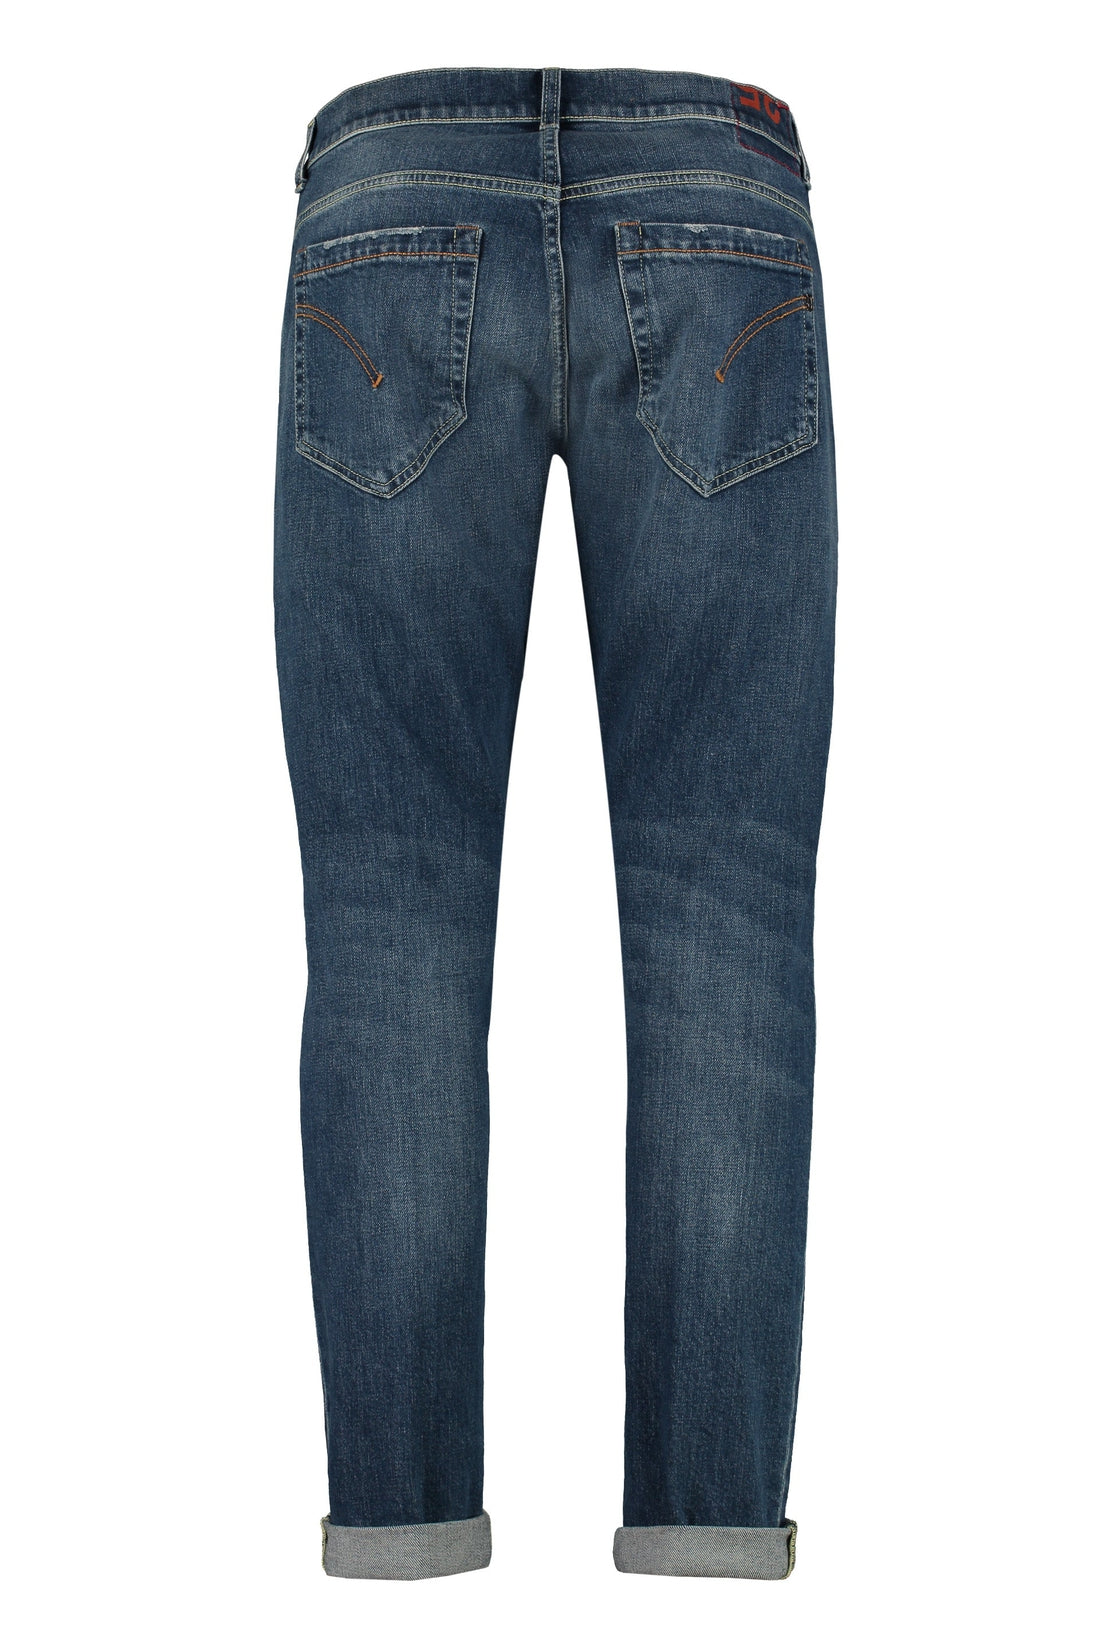 Dondup-OUTLET-SALE-George skinny jeans-ARCHIVIST